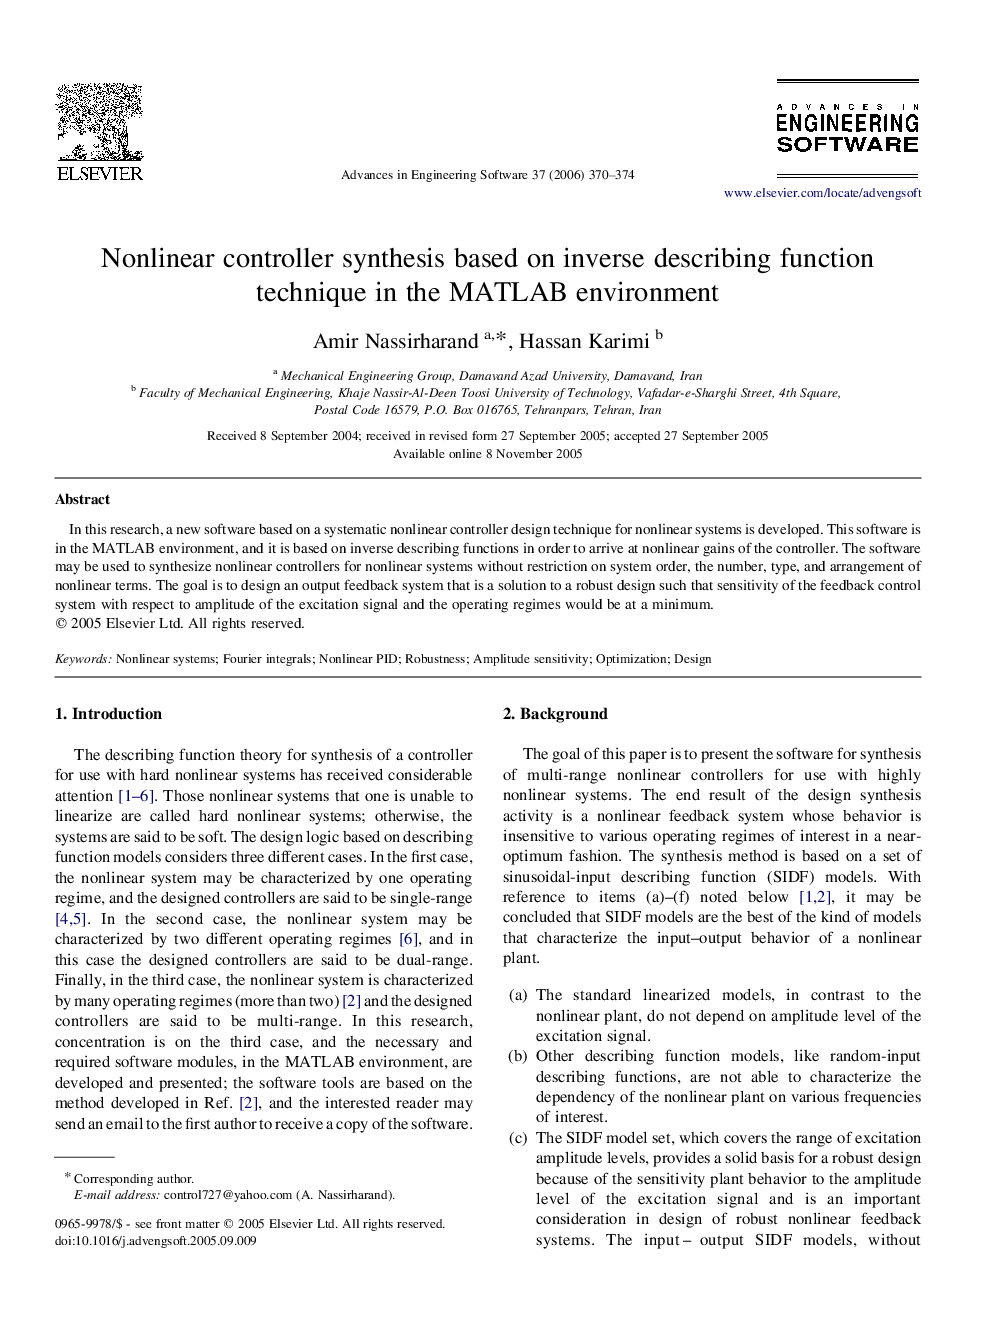 Nonlinear controller synthesis based on inverse describing function technique in the MATLAB environment